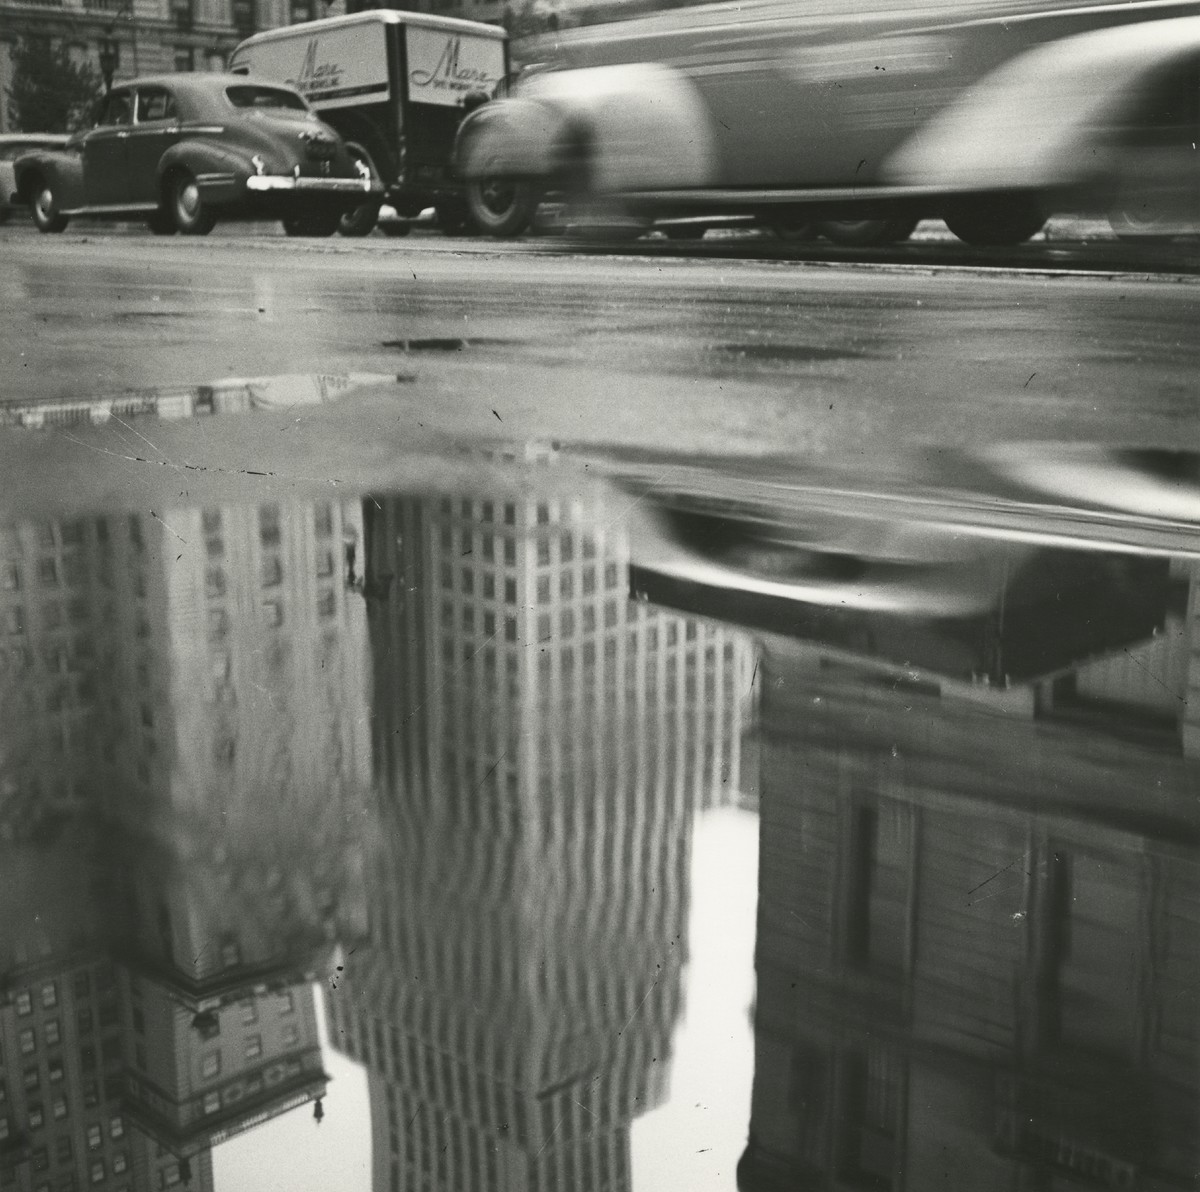 Robert Frank, New York City, 1948
© Andrea Frank Foundation; courtesy Pace/MacGill Gallery, New York